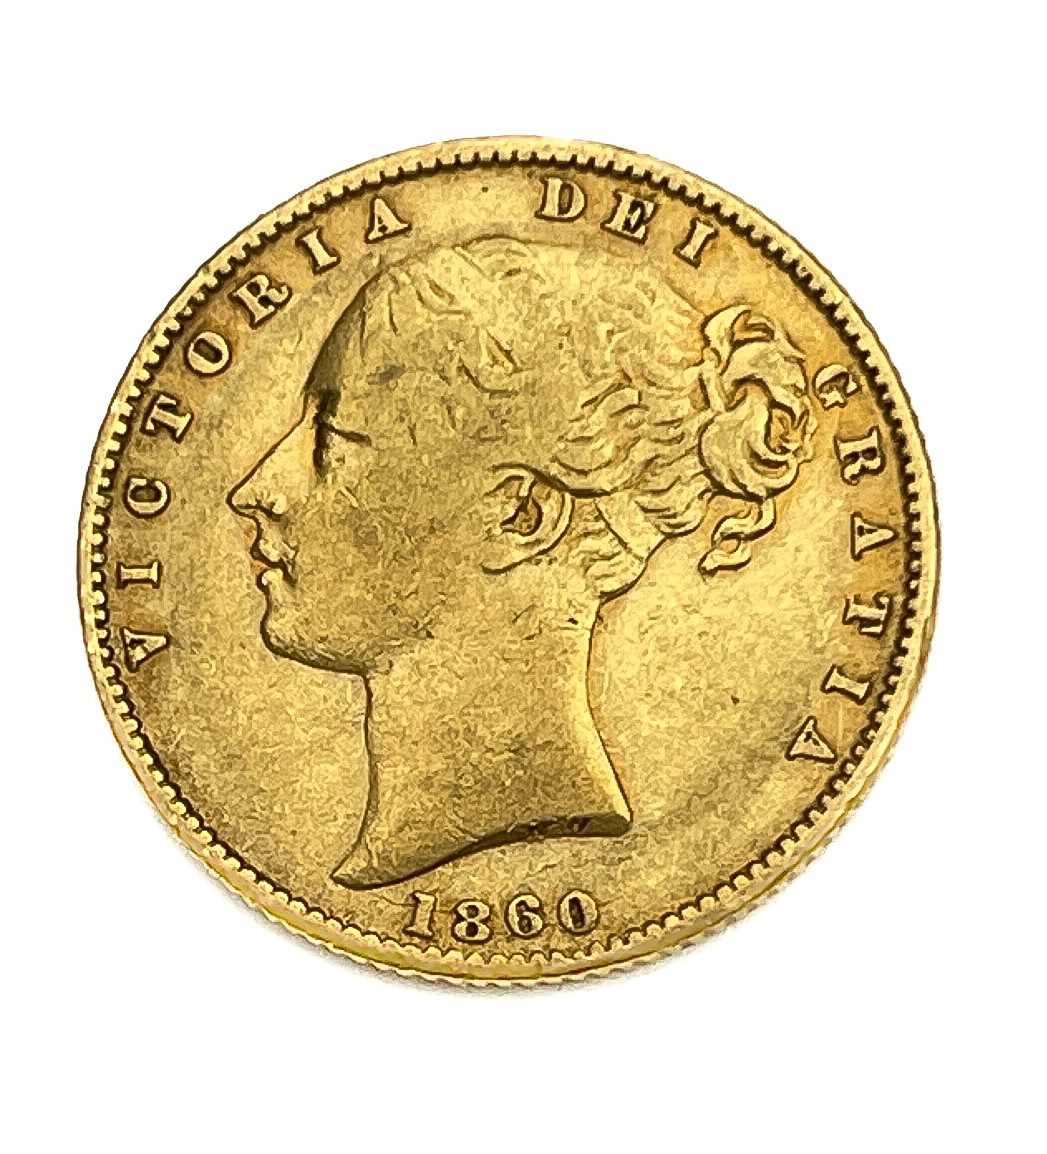 Victoria, Sovereign, 1860. S3852D